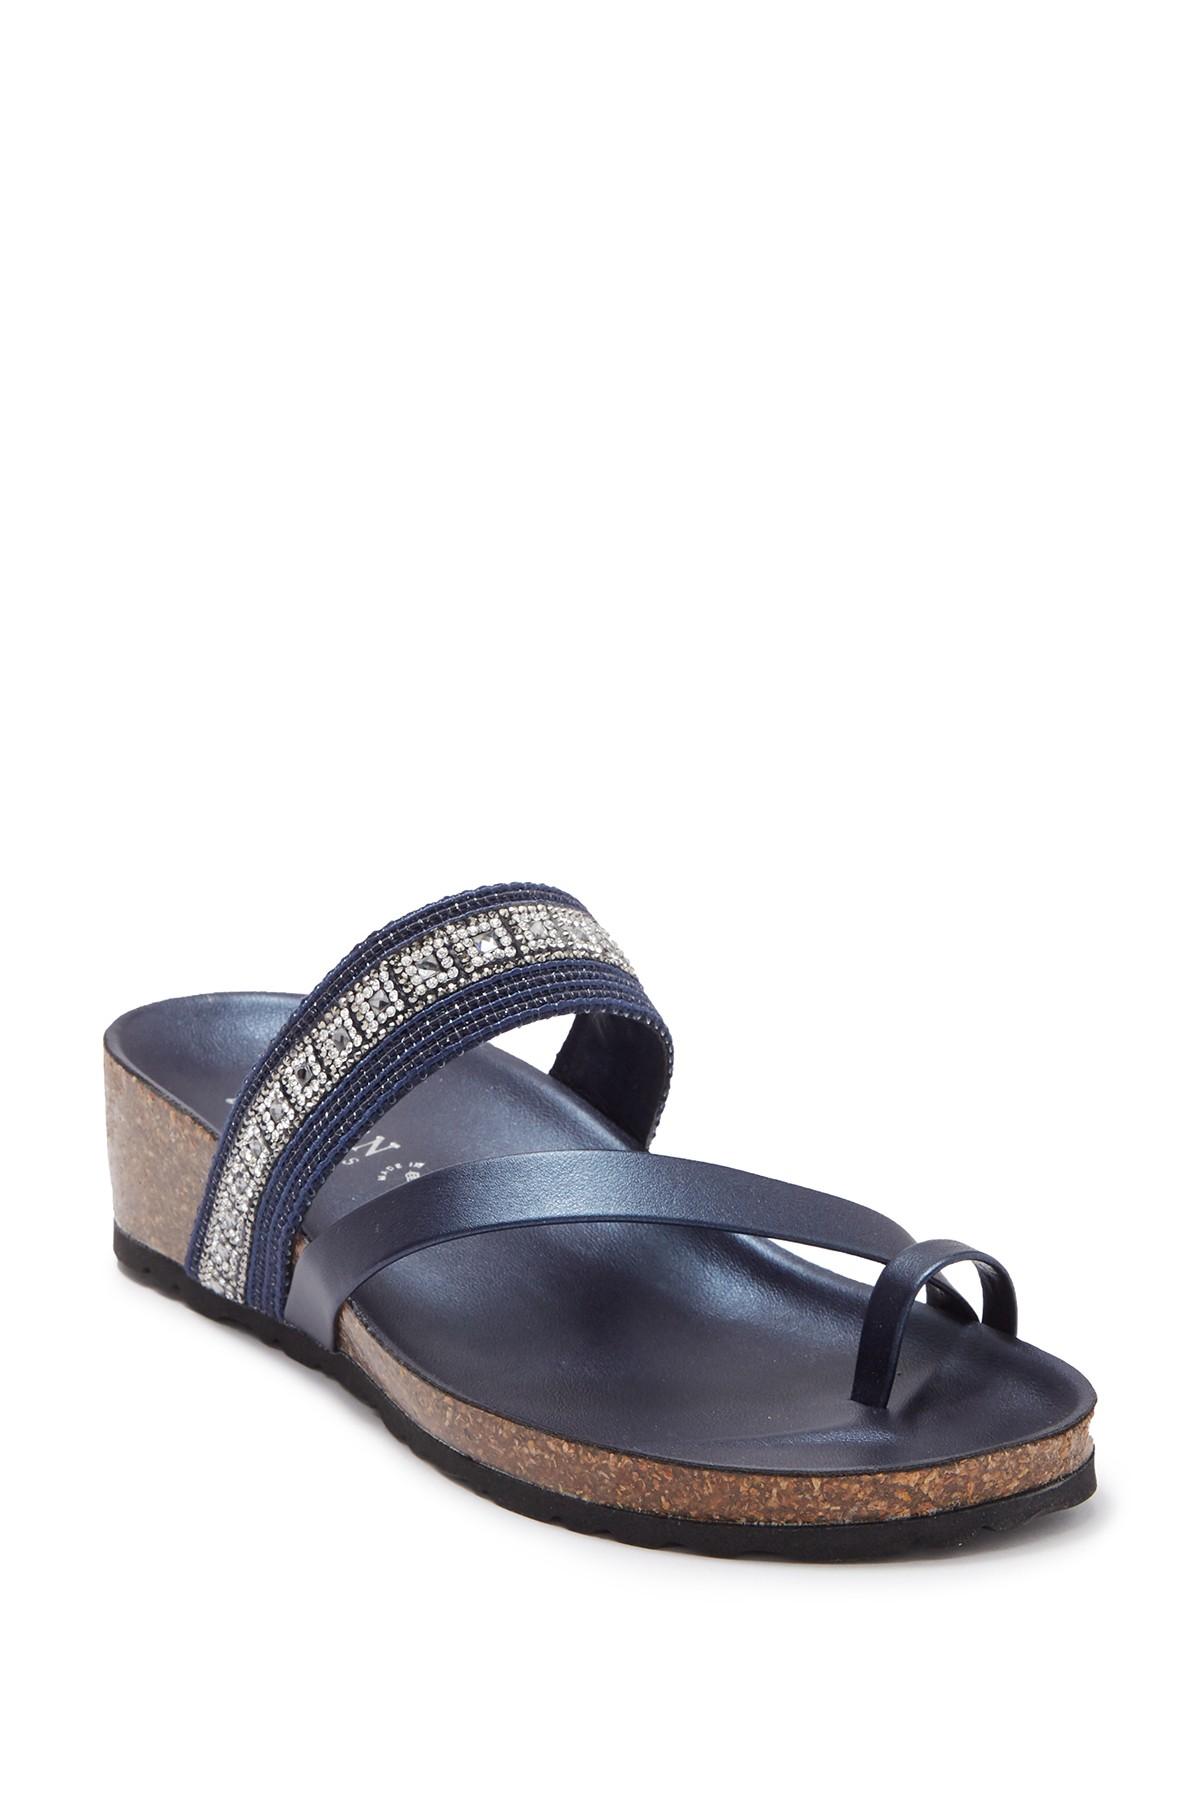 Italian Shoemakers Mace Wedge Sandal in Blue - Lyst